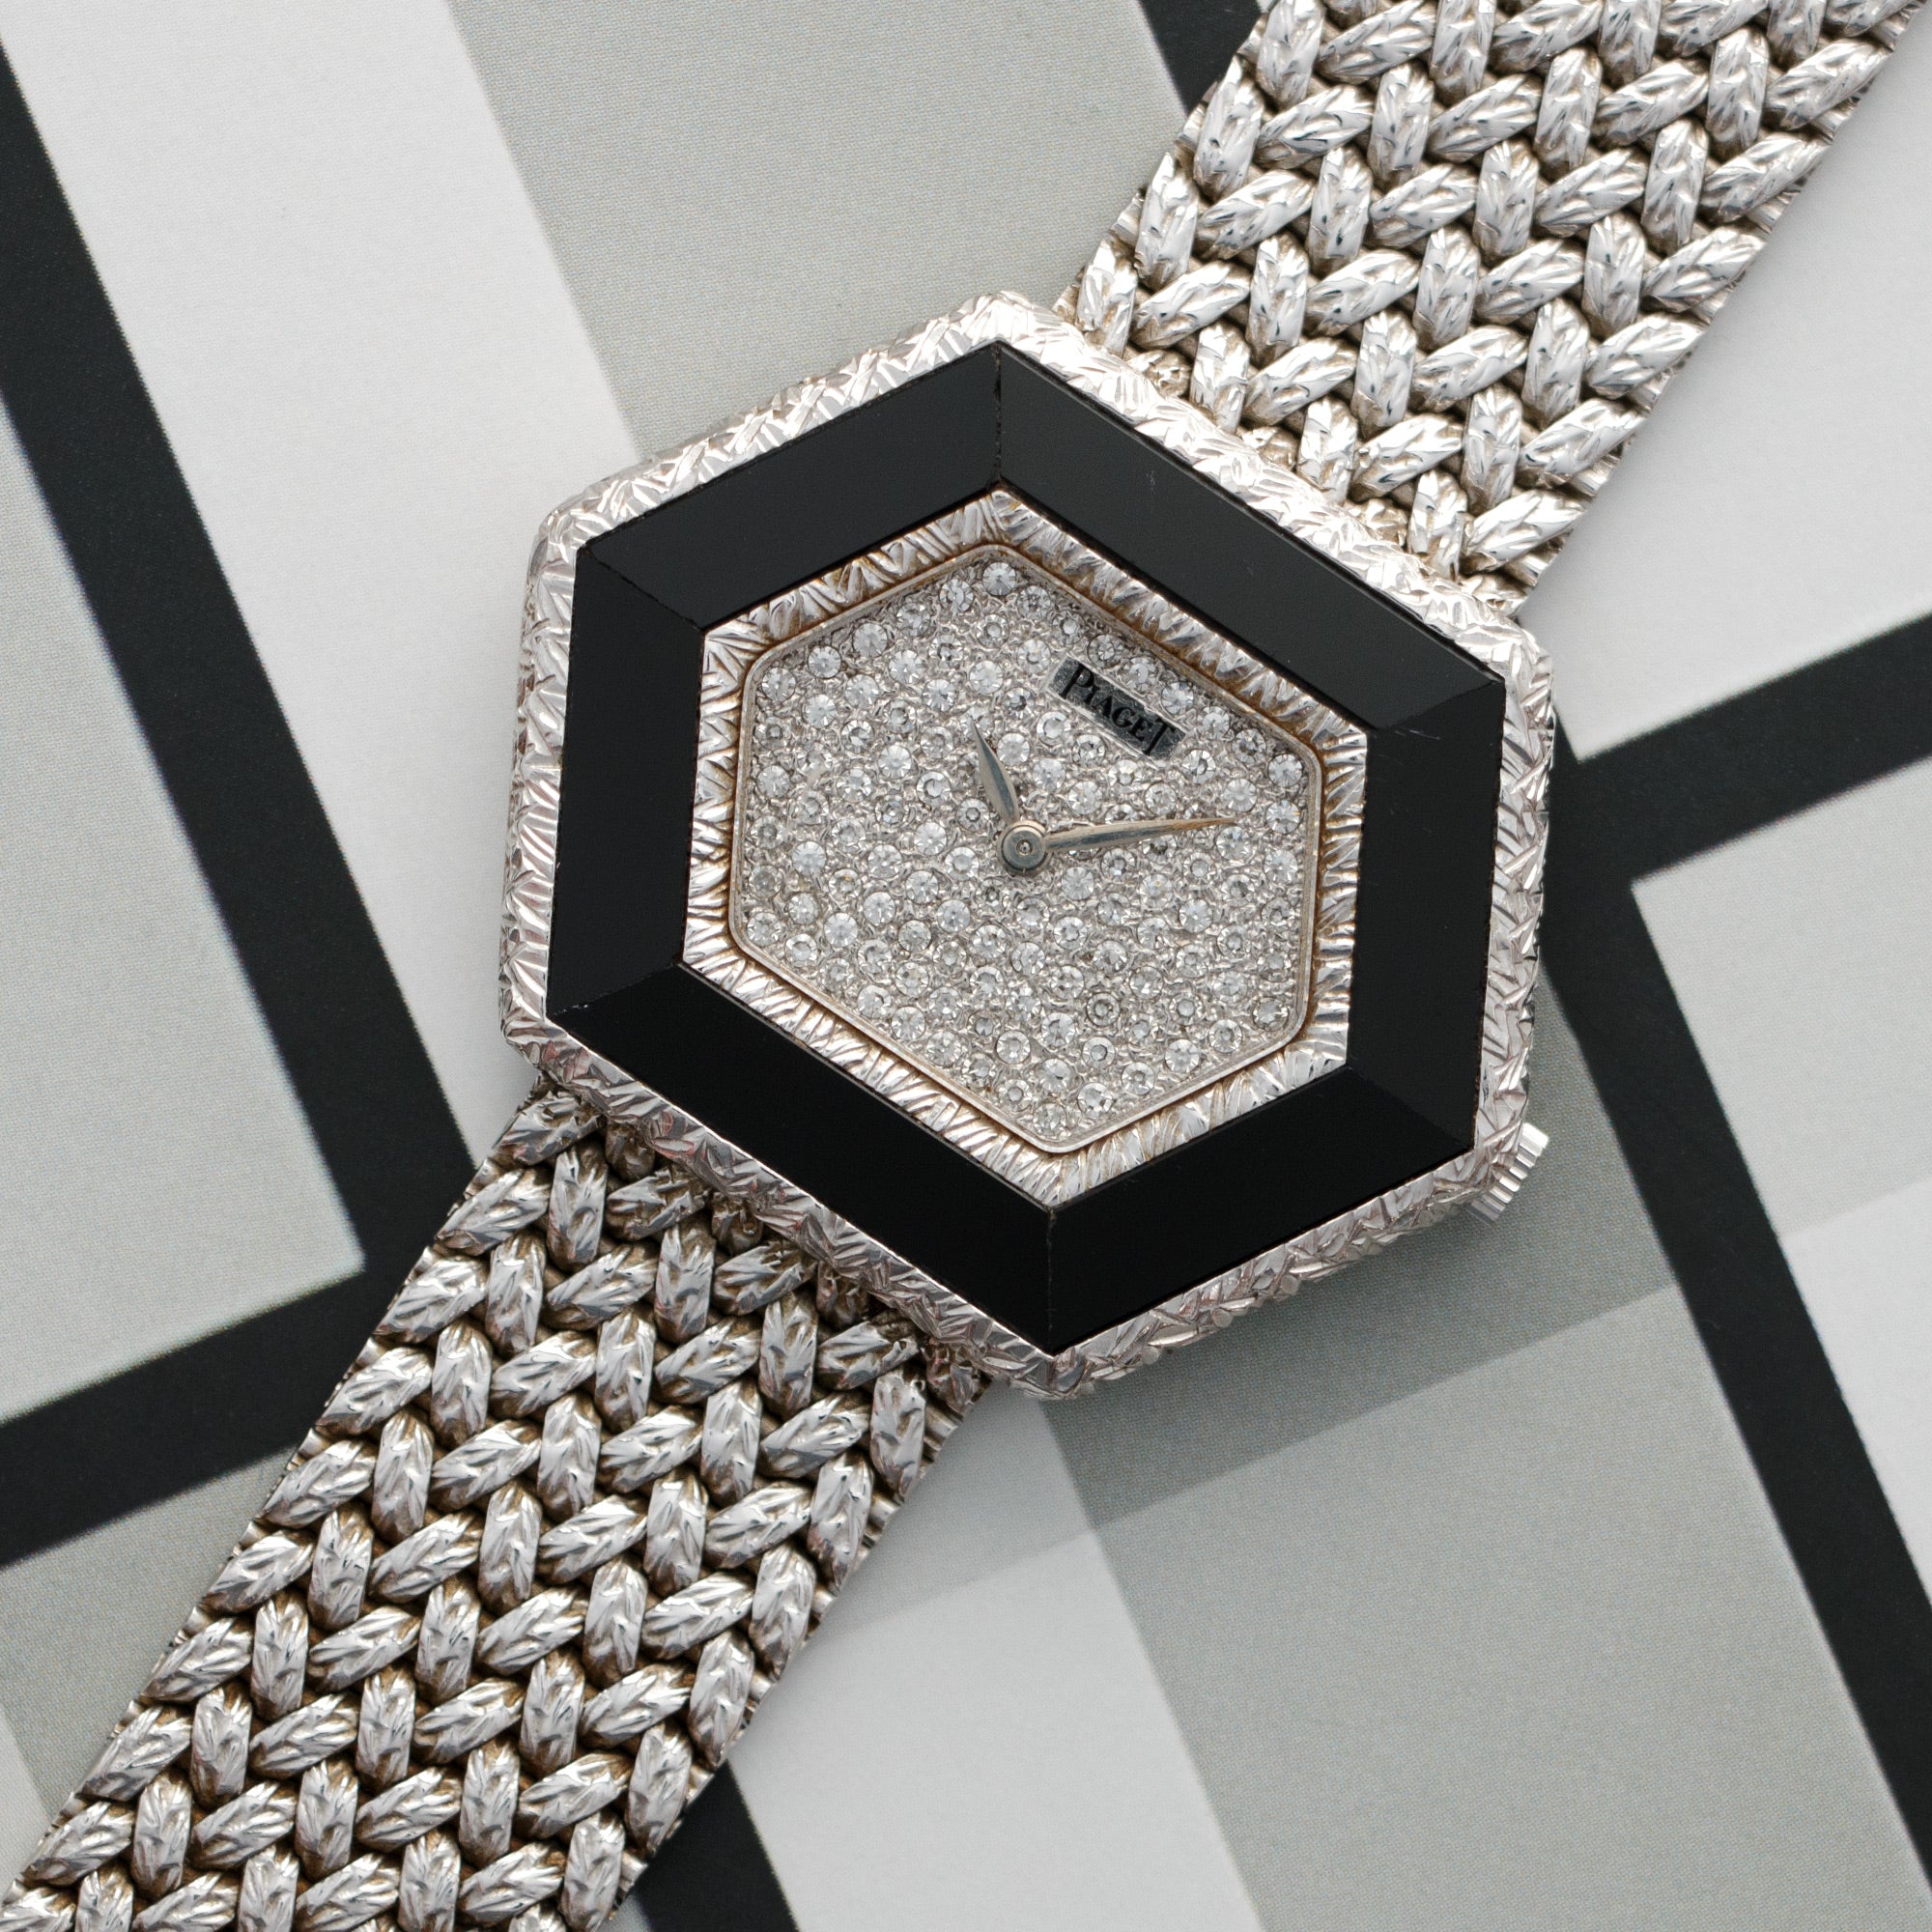 Piaget - Piaget White Gold Onyx & Diamond Watch, 1970s - The Keystone Watches